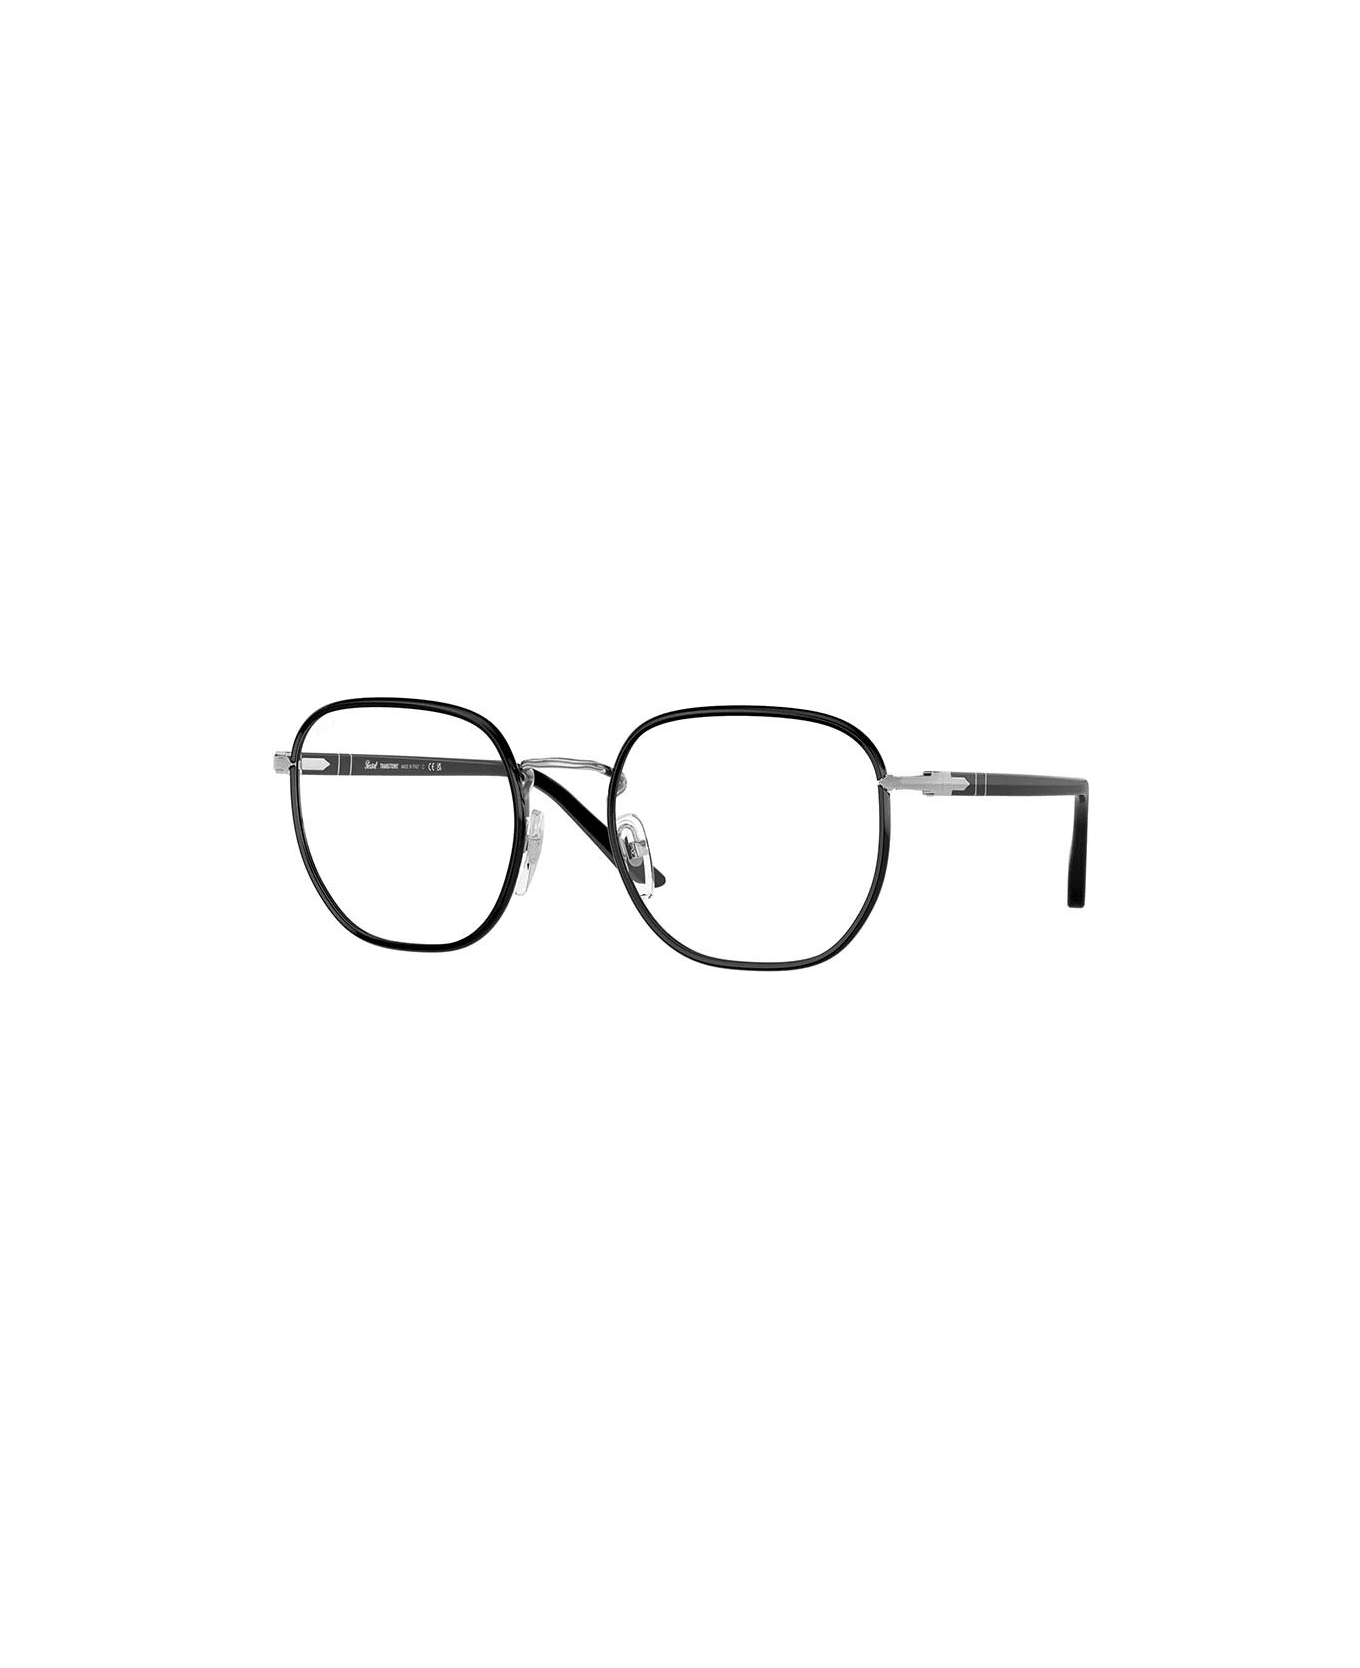 Persol Eyewear - Nero/Verde アイウェア